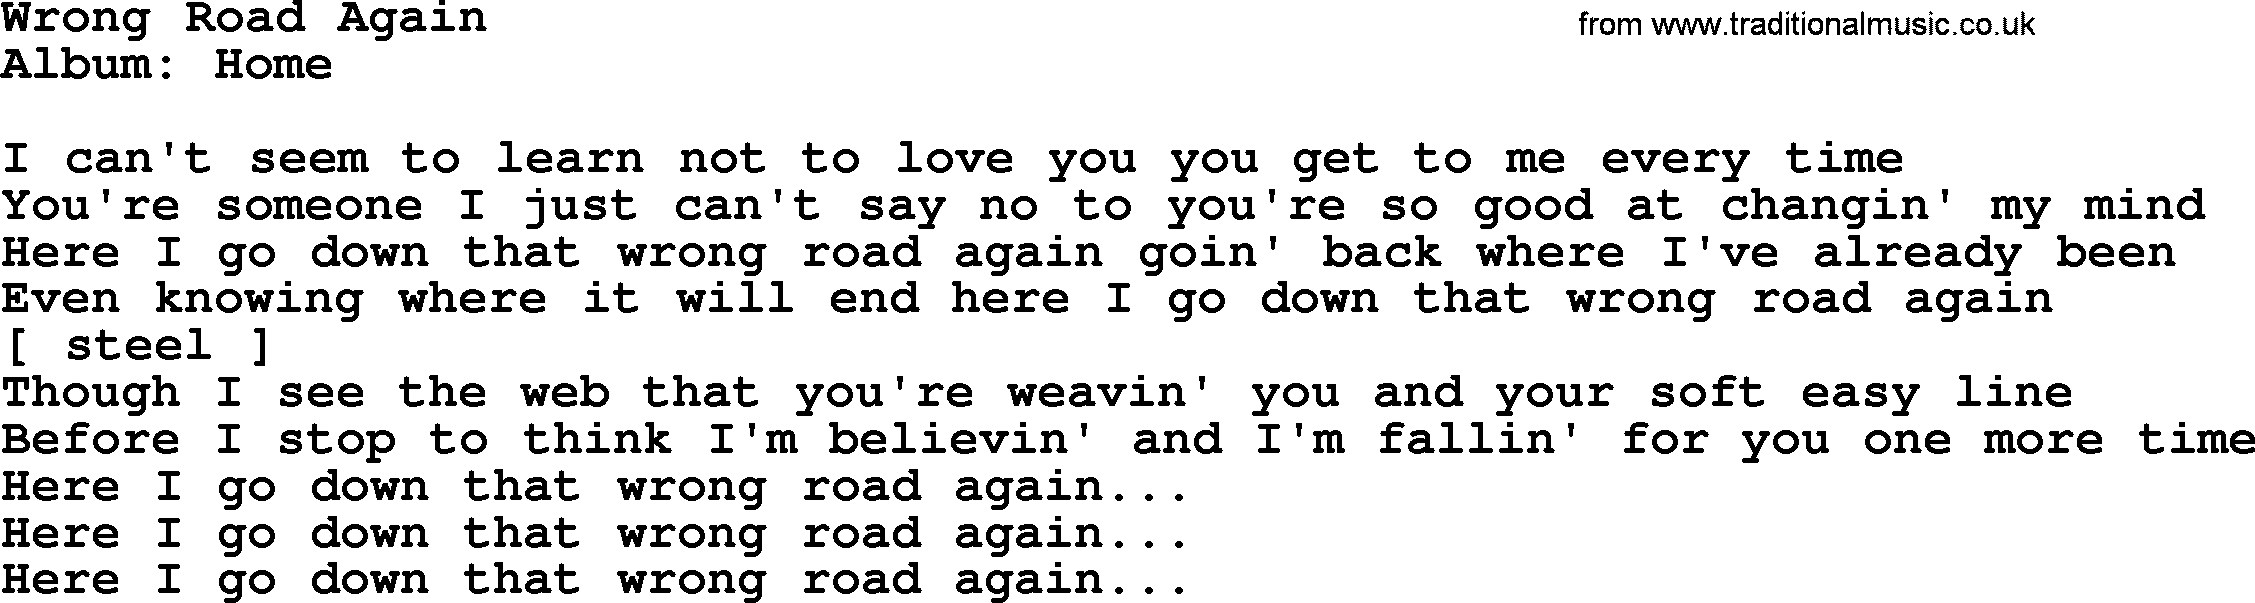 Loretta Lynn song: Wrong Road Again lyrics